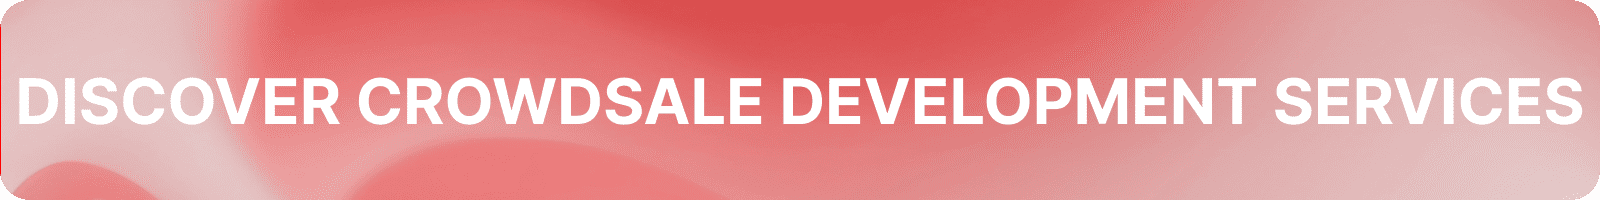 discover crowdsale development services